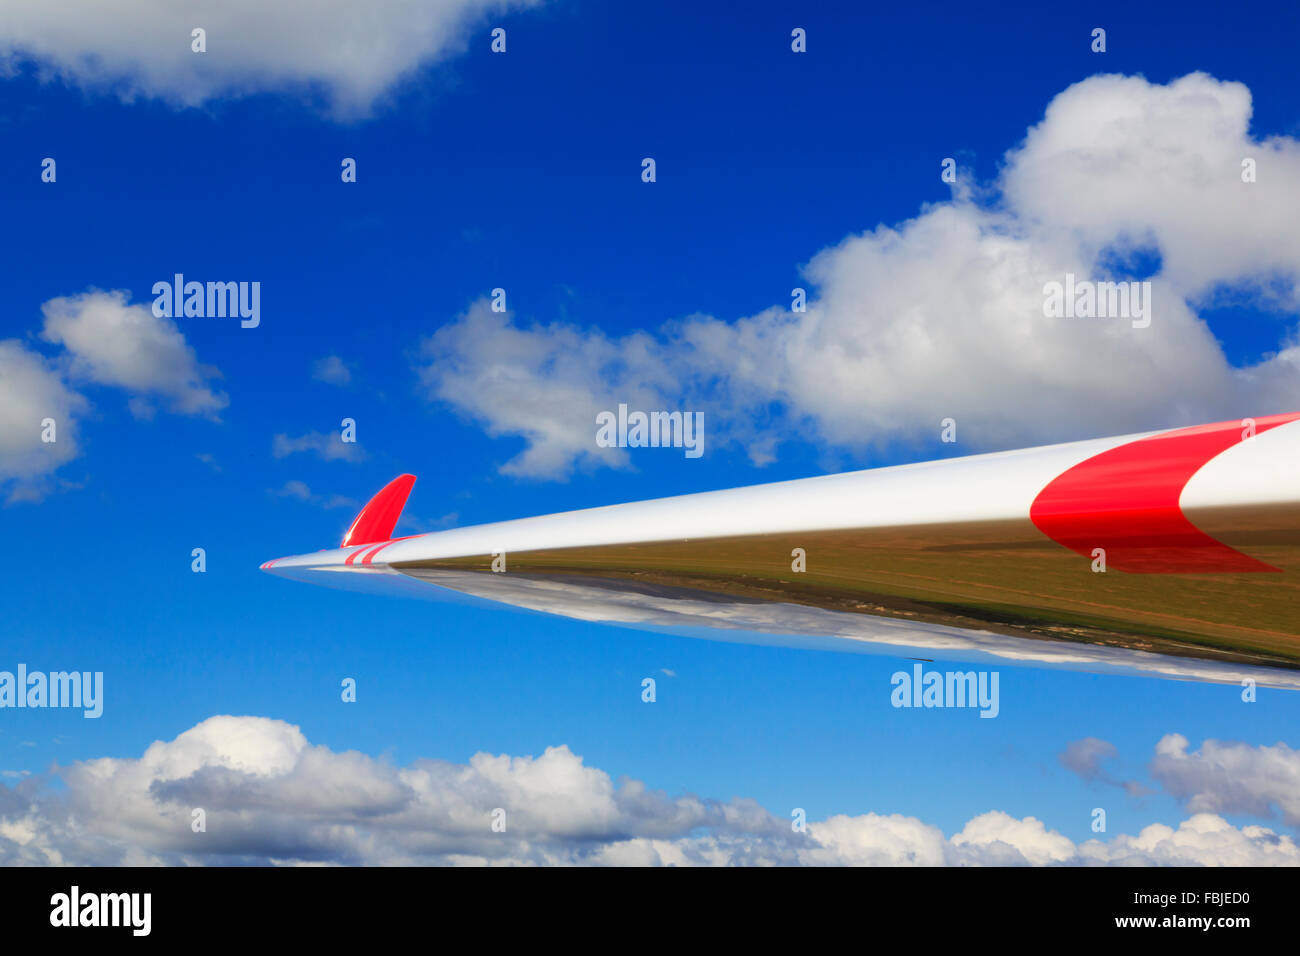 Duo Discus glider punta ala contra azul, cielo nublado. Foto de stock